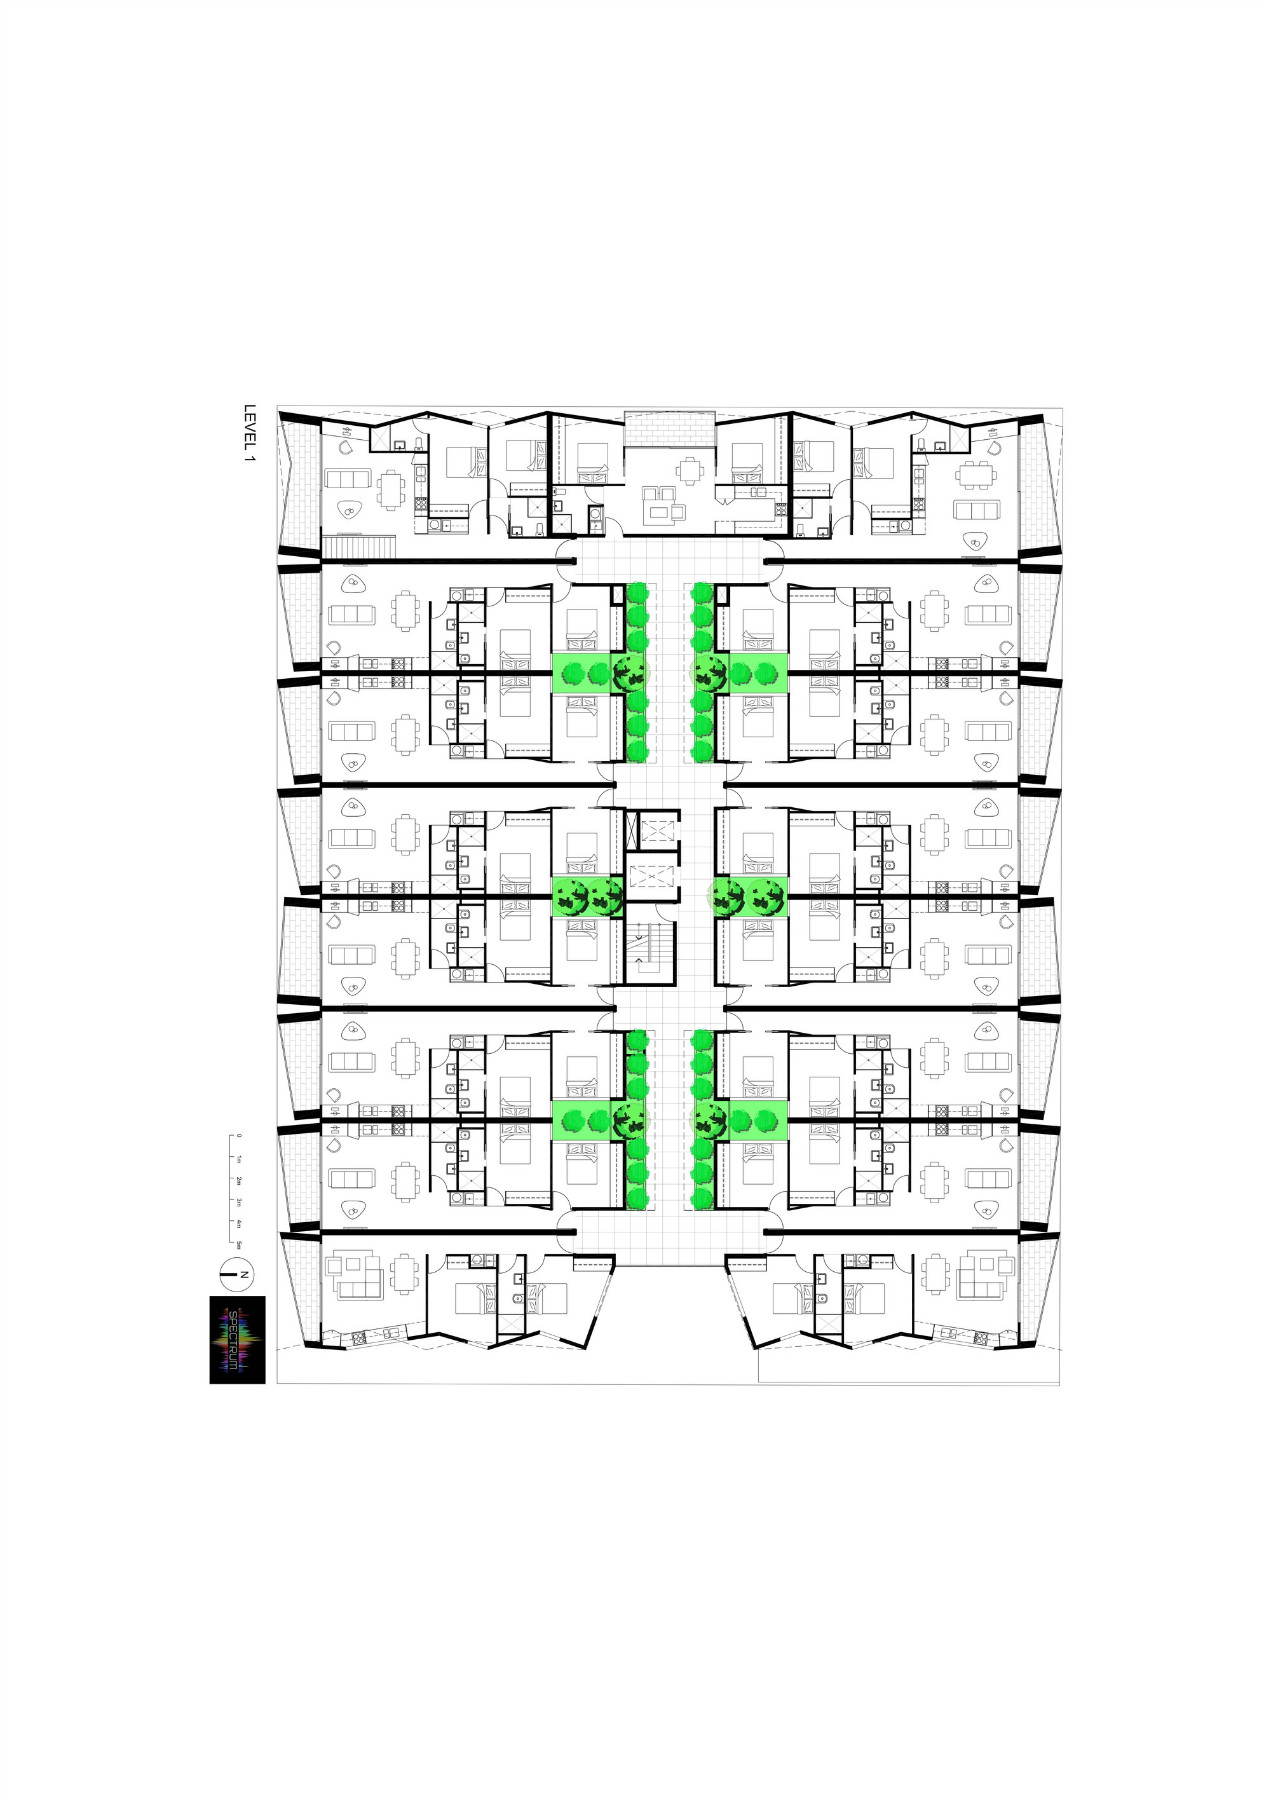 Spectrum Apartments floor plans